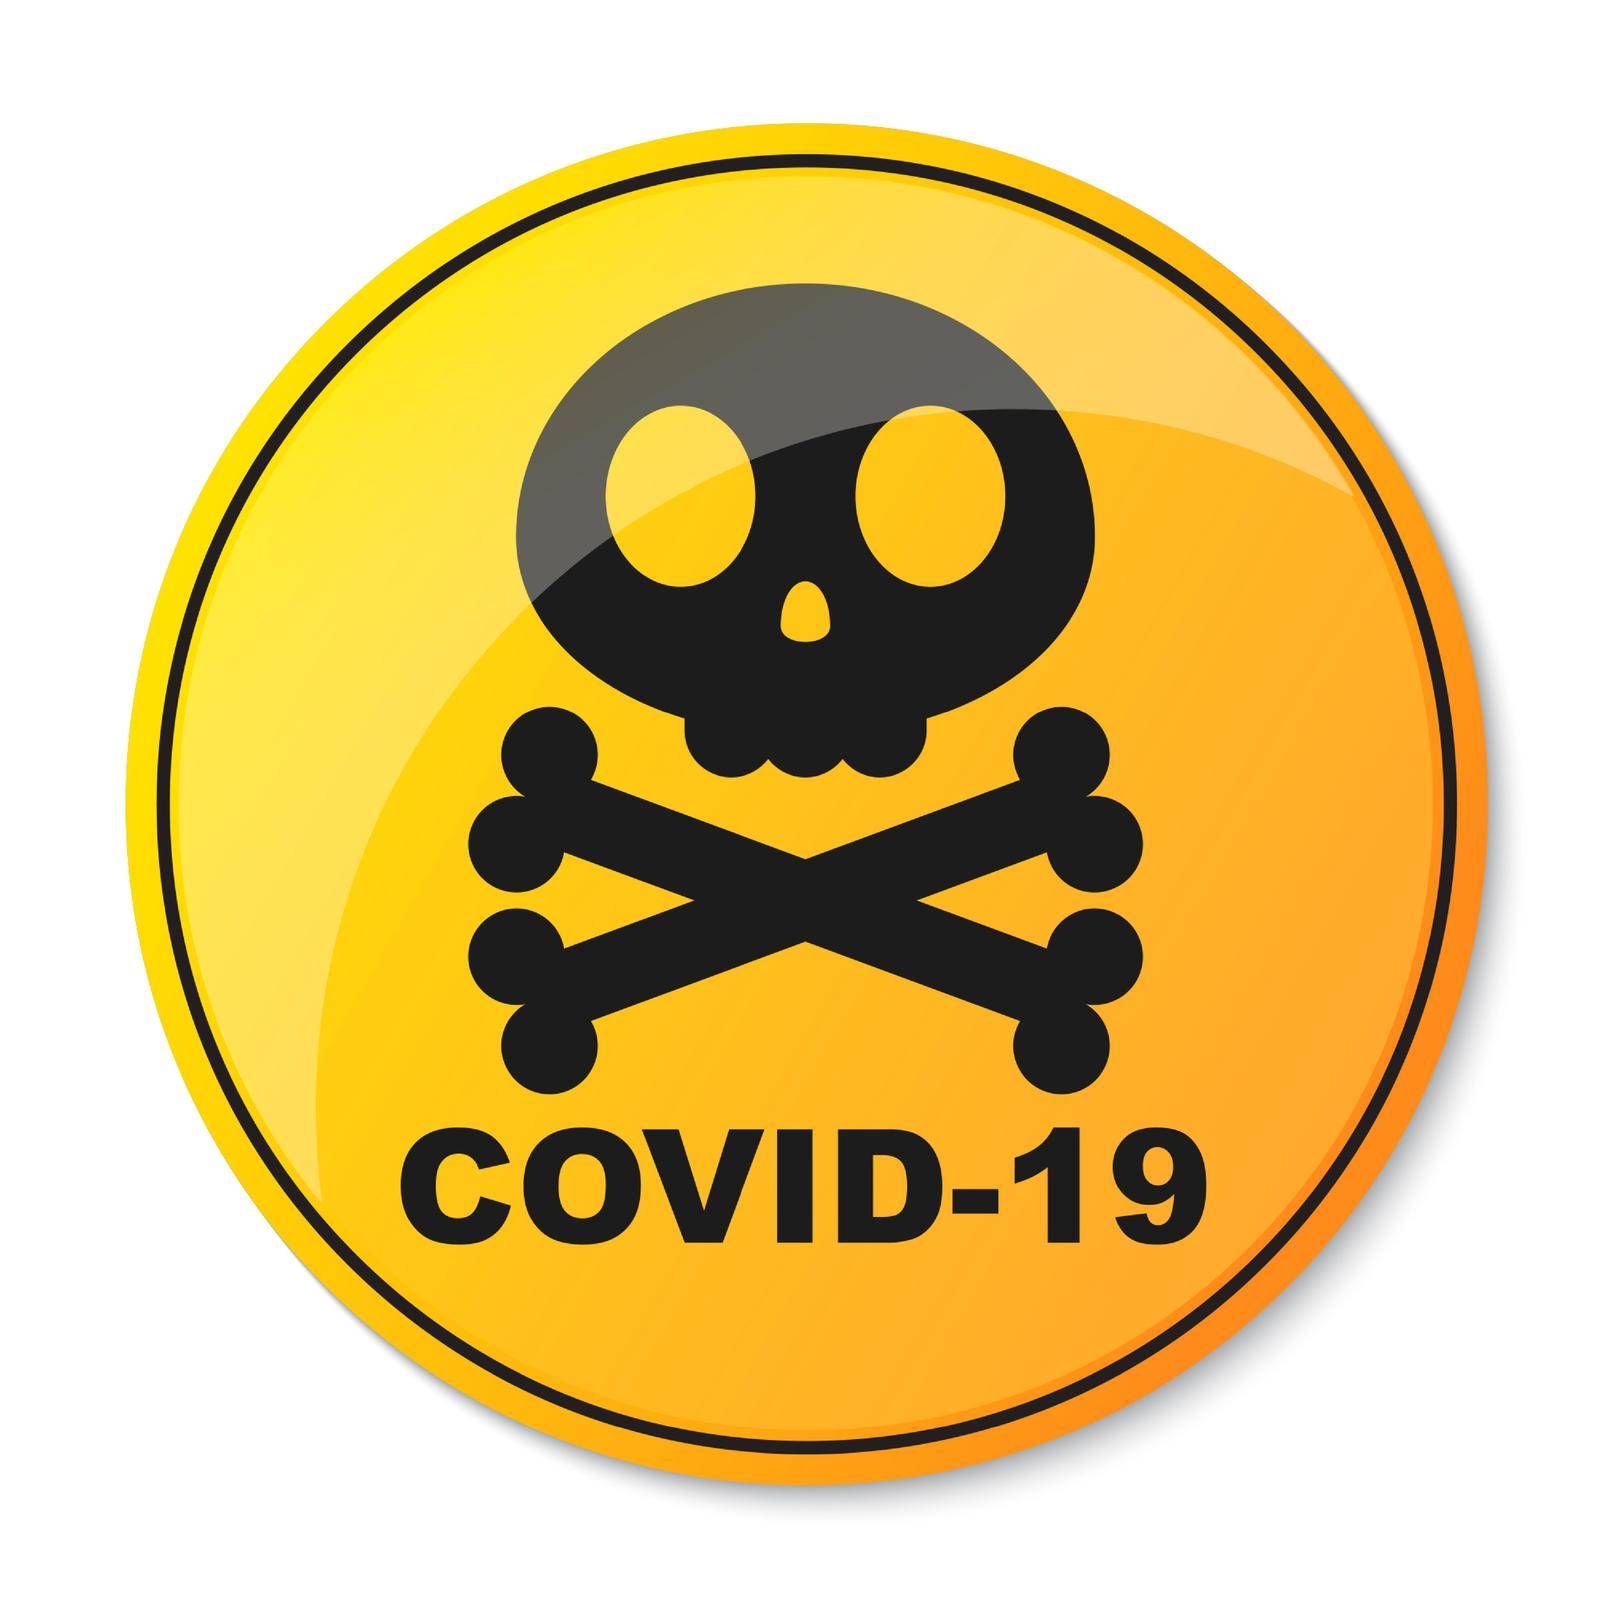 Covid-19 warning symbol. Coronavirus danger sign with skull. Epidemic coronavirus concept. Vector illustration.